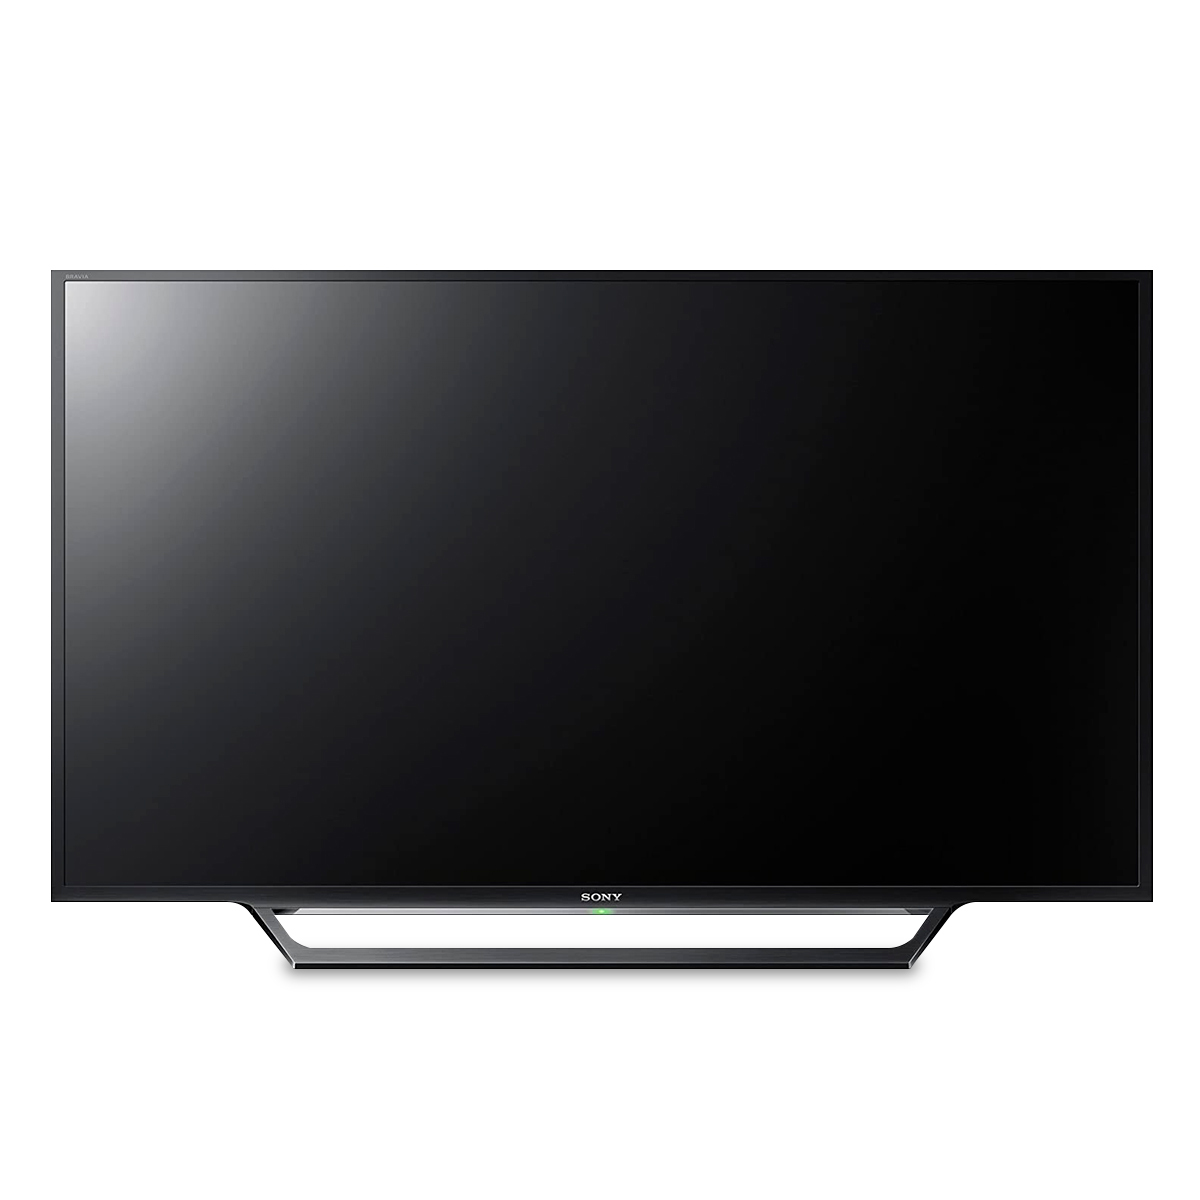 Pantalla TV Sony Bravia KDL-32W600D HD 32 Pulg. Smart TV Led Dolby Digital  Plus HDMI | Office Depot Mexico